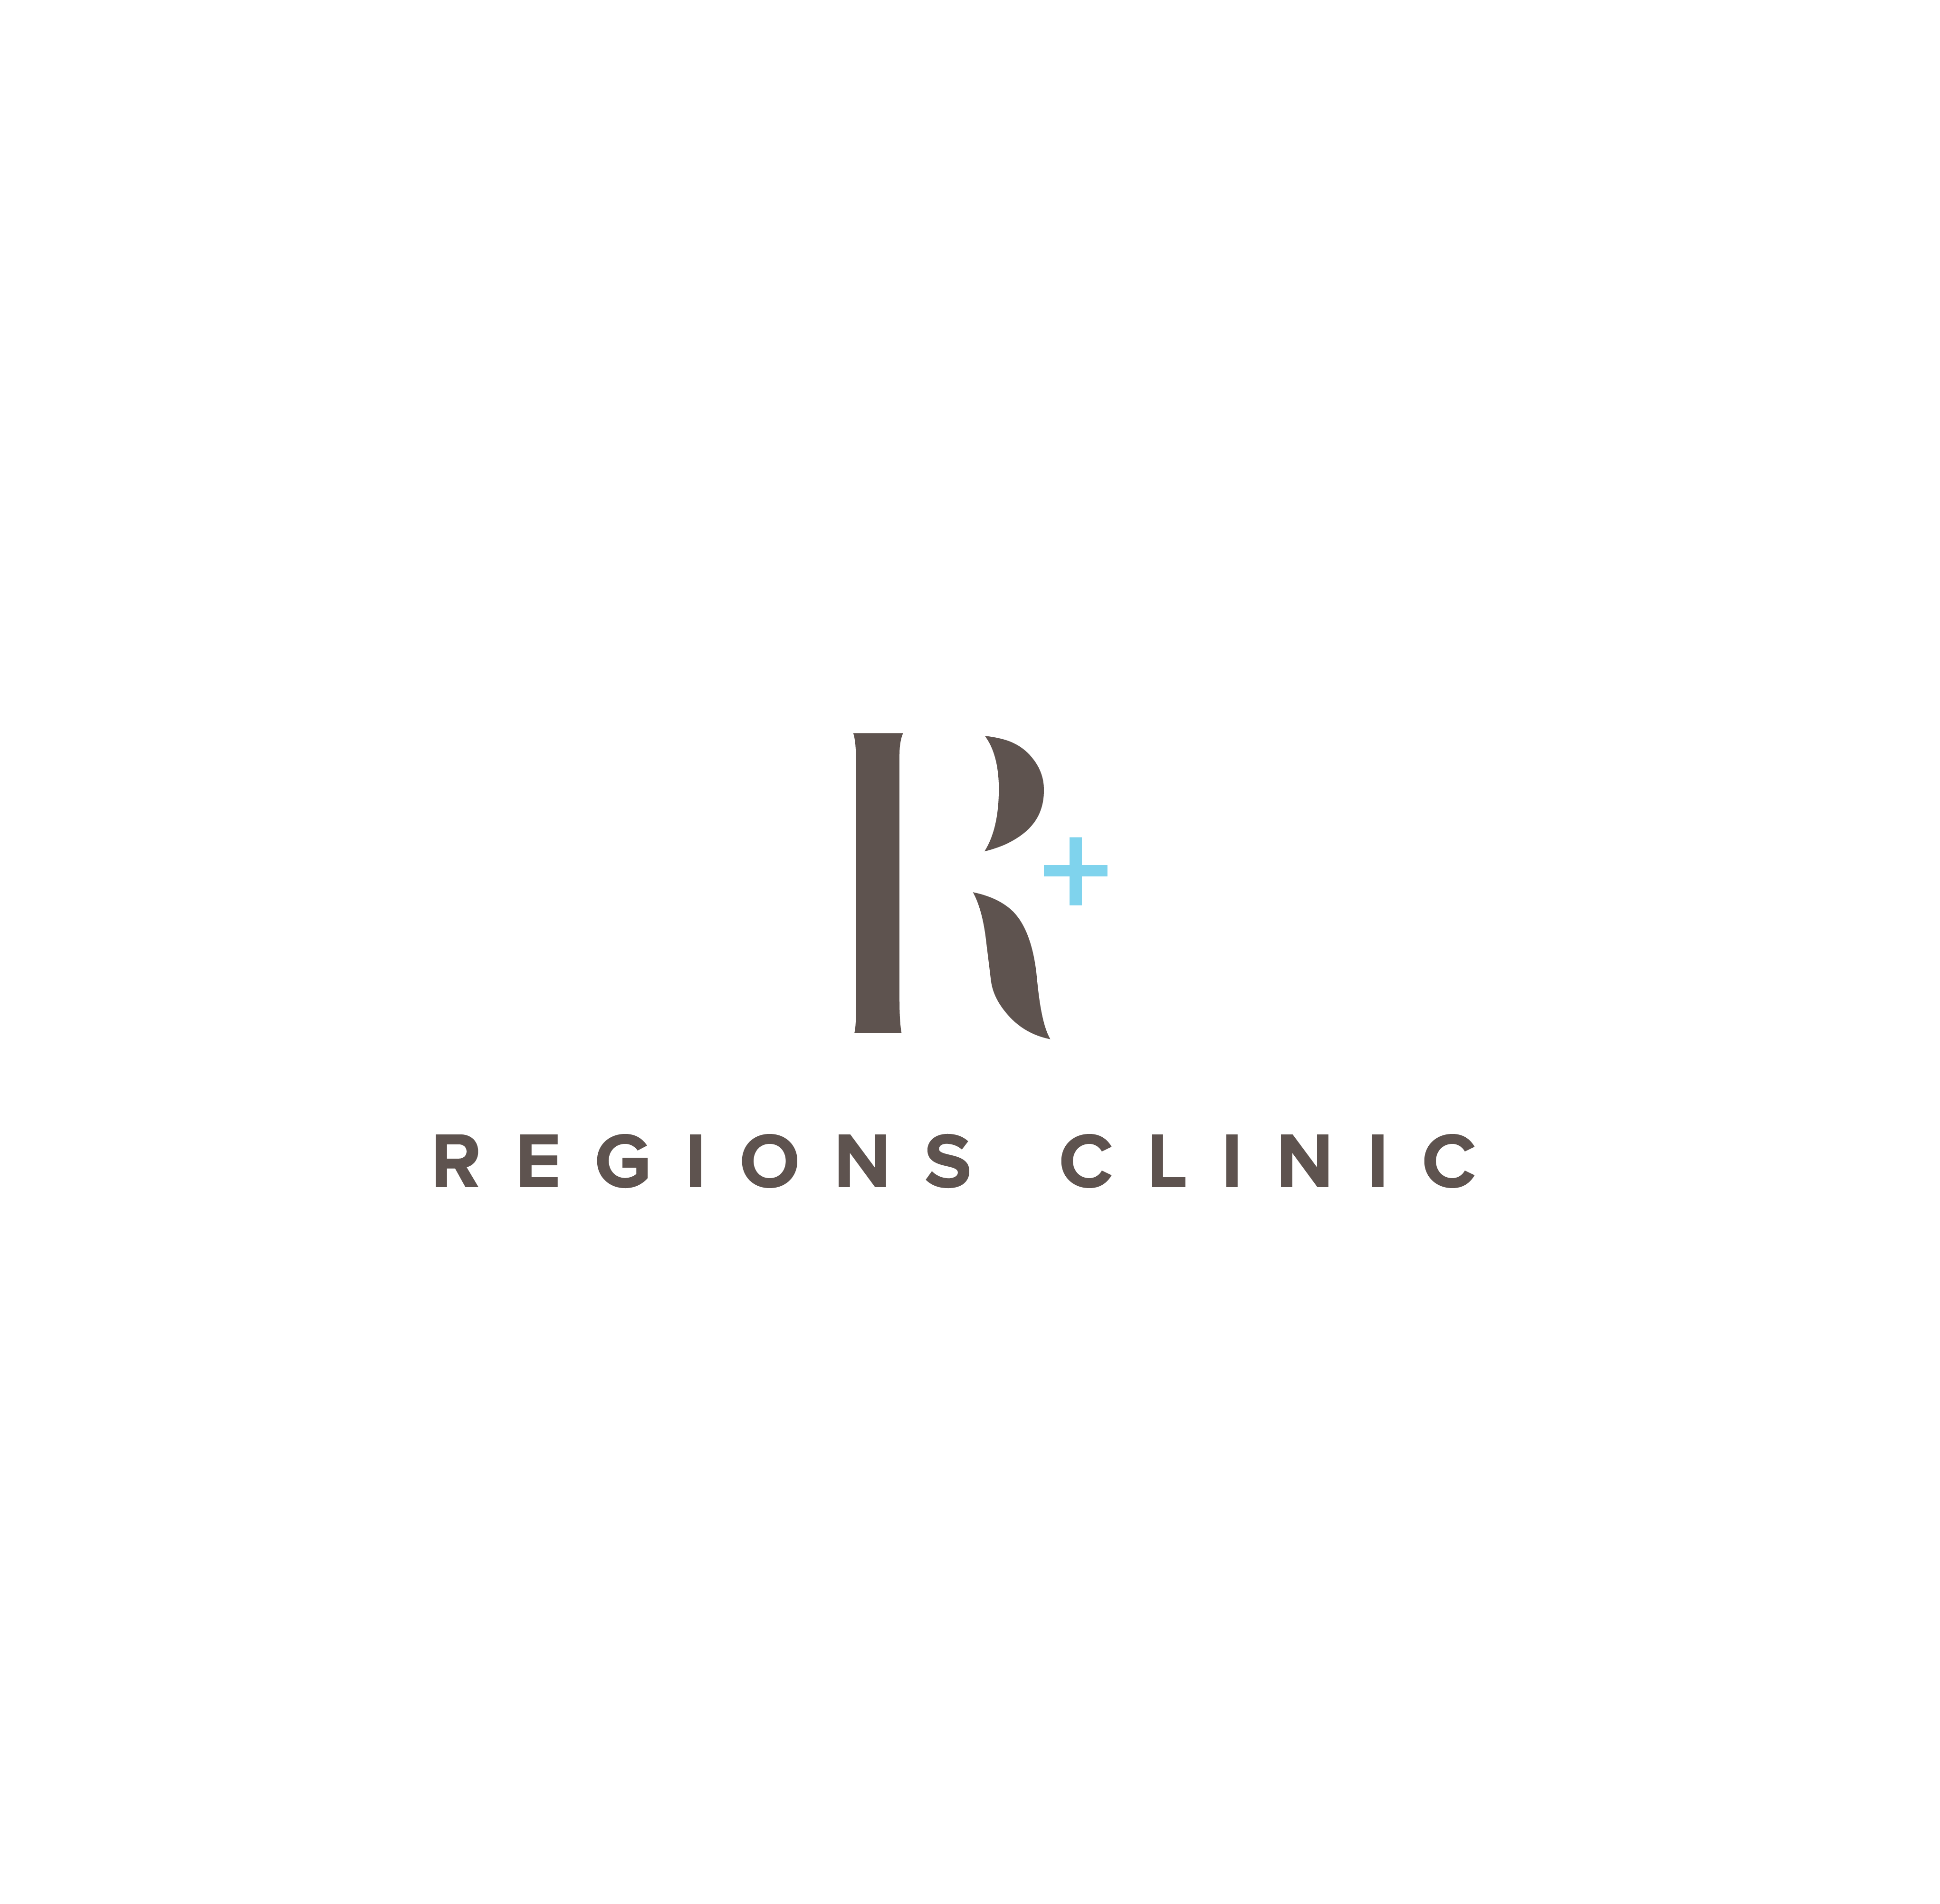 Regions Clinic